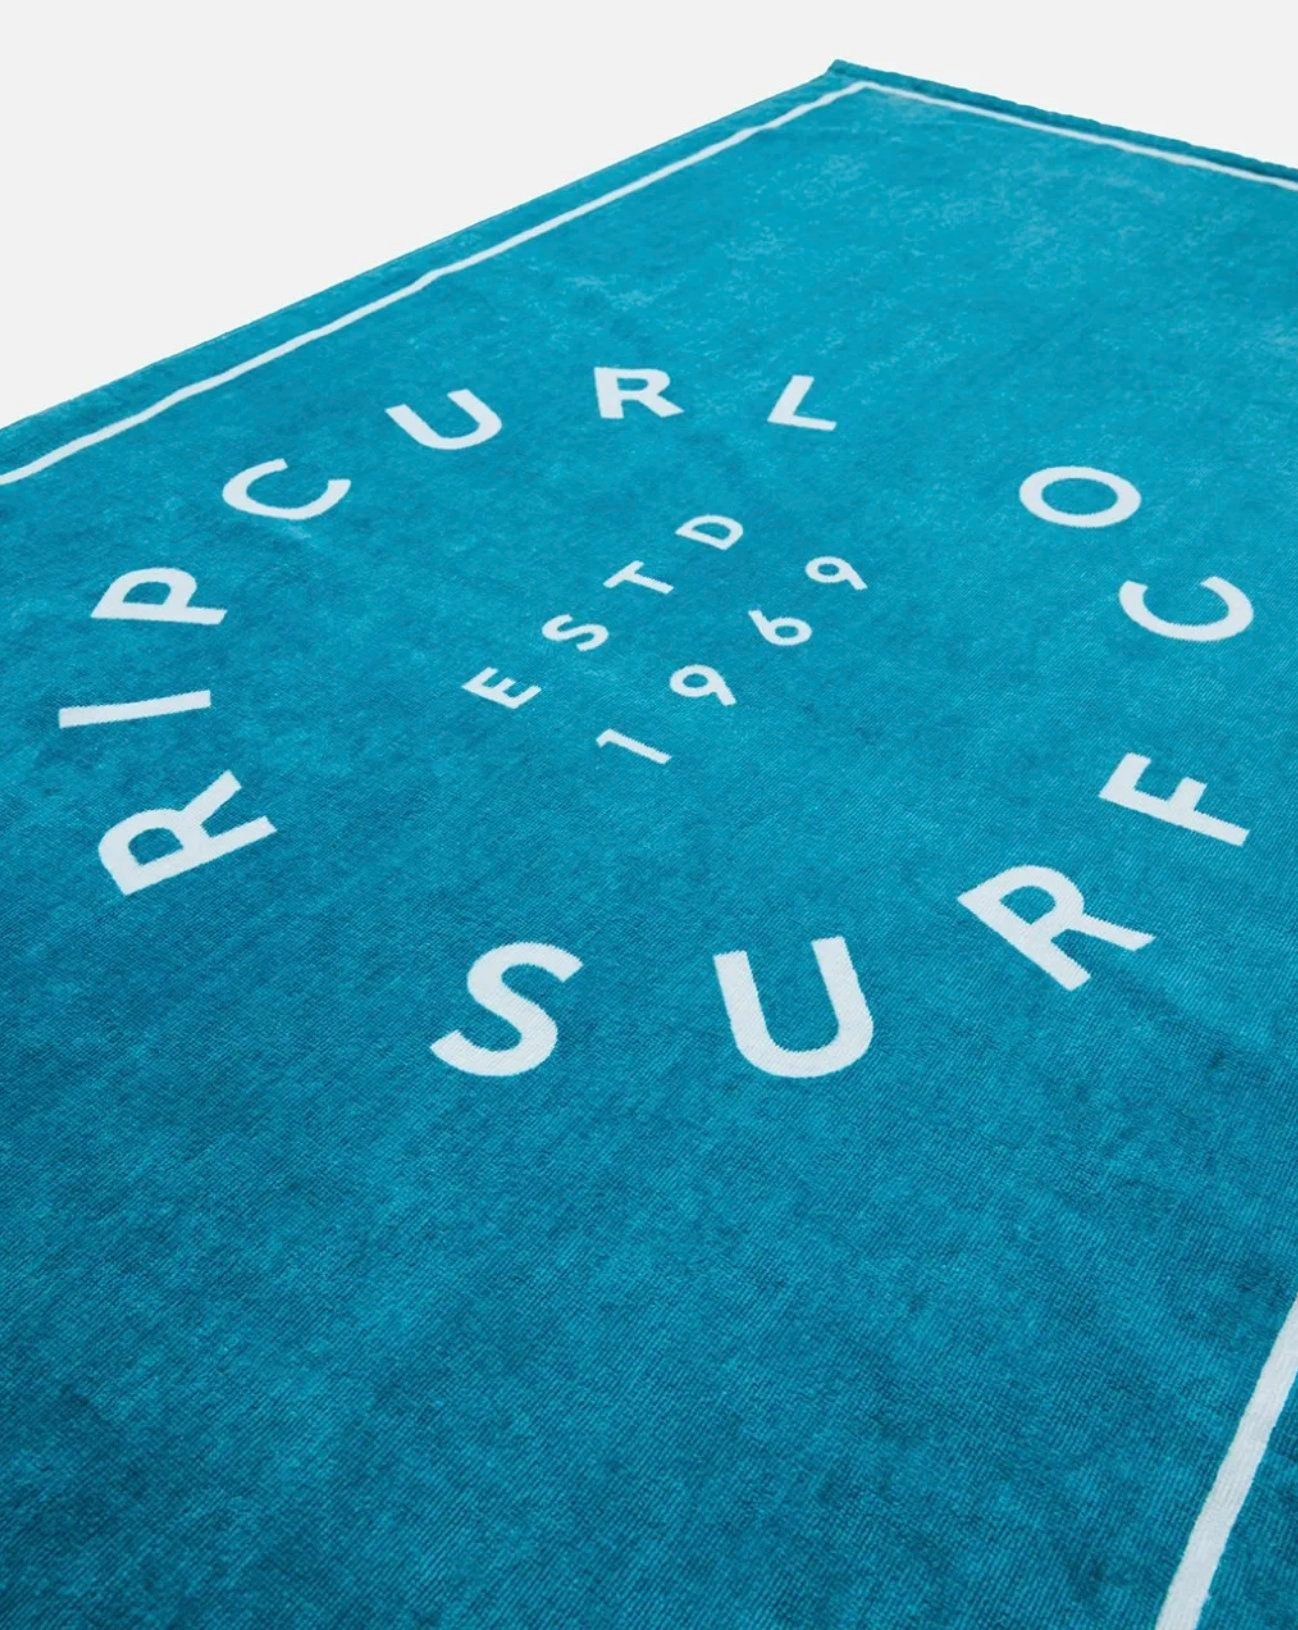 Handtuch Strandtuch großes Curl Premium Blue Rip